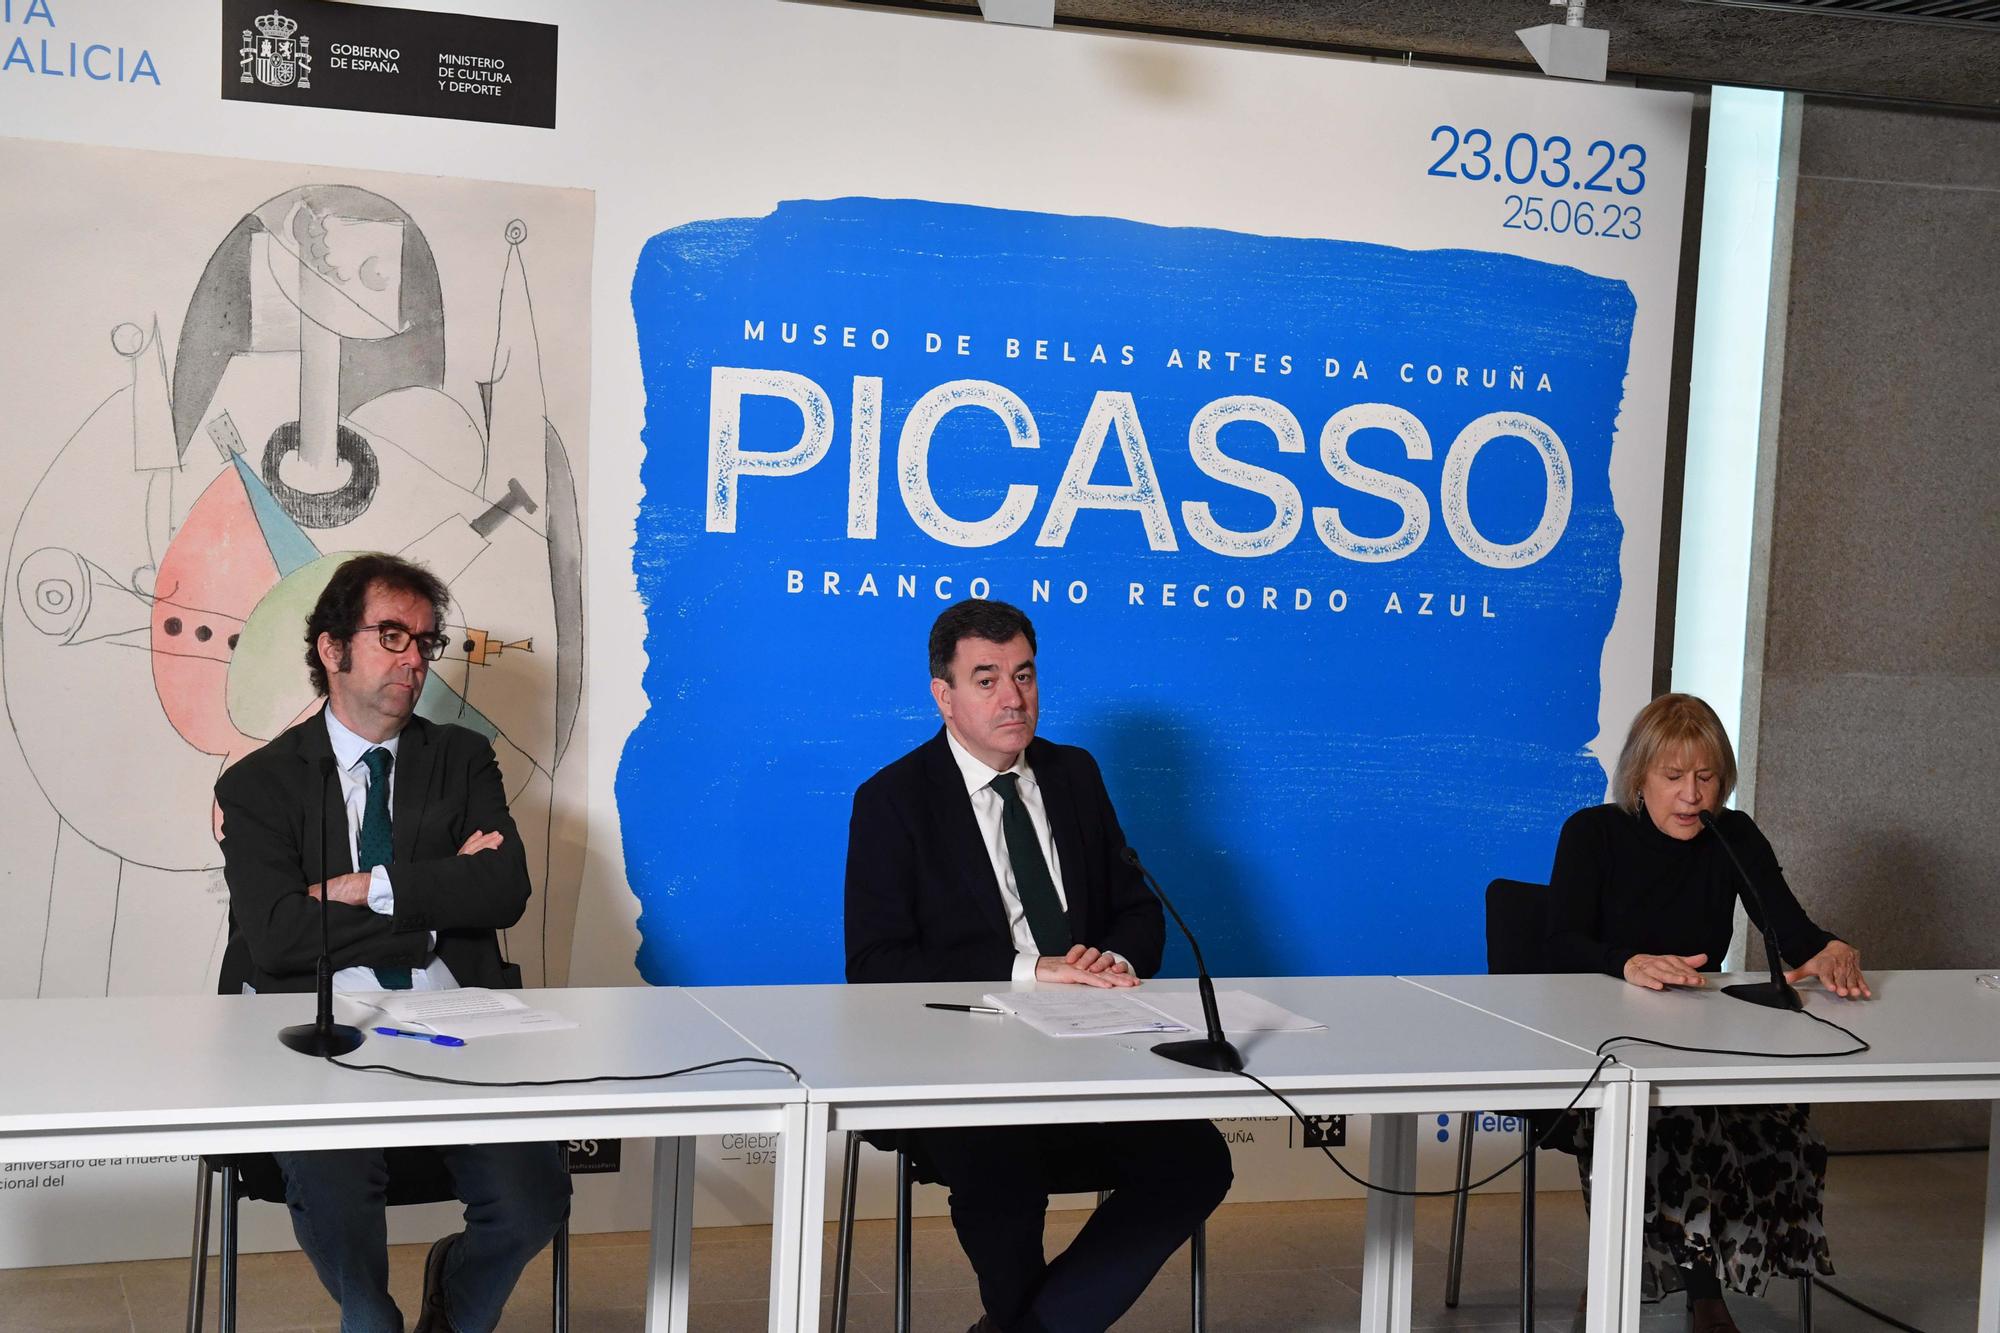 Presentación en A Coruña de la exposición 'Picasso branco no recordo azul'